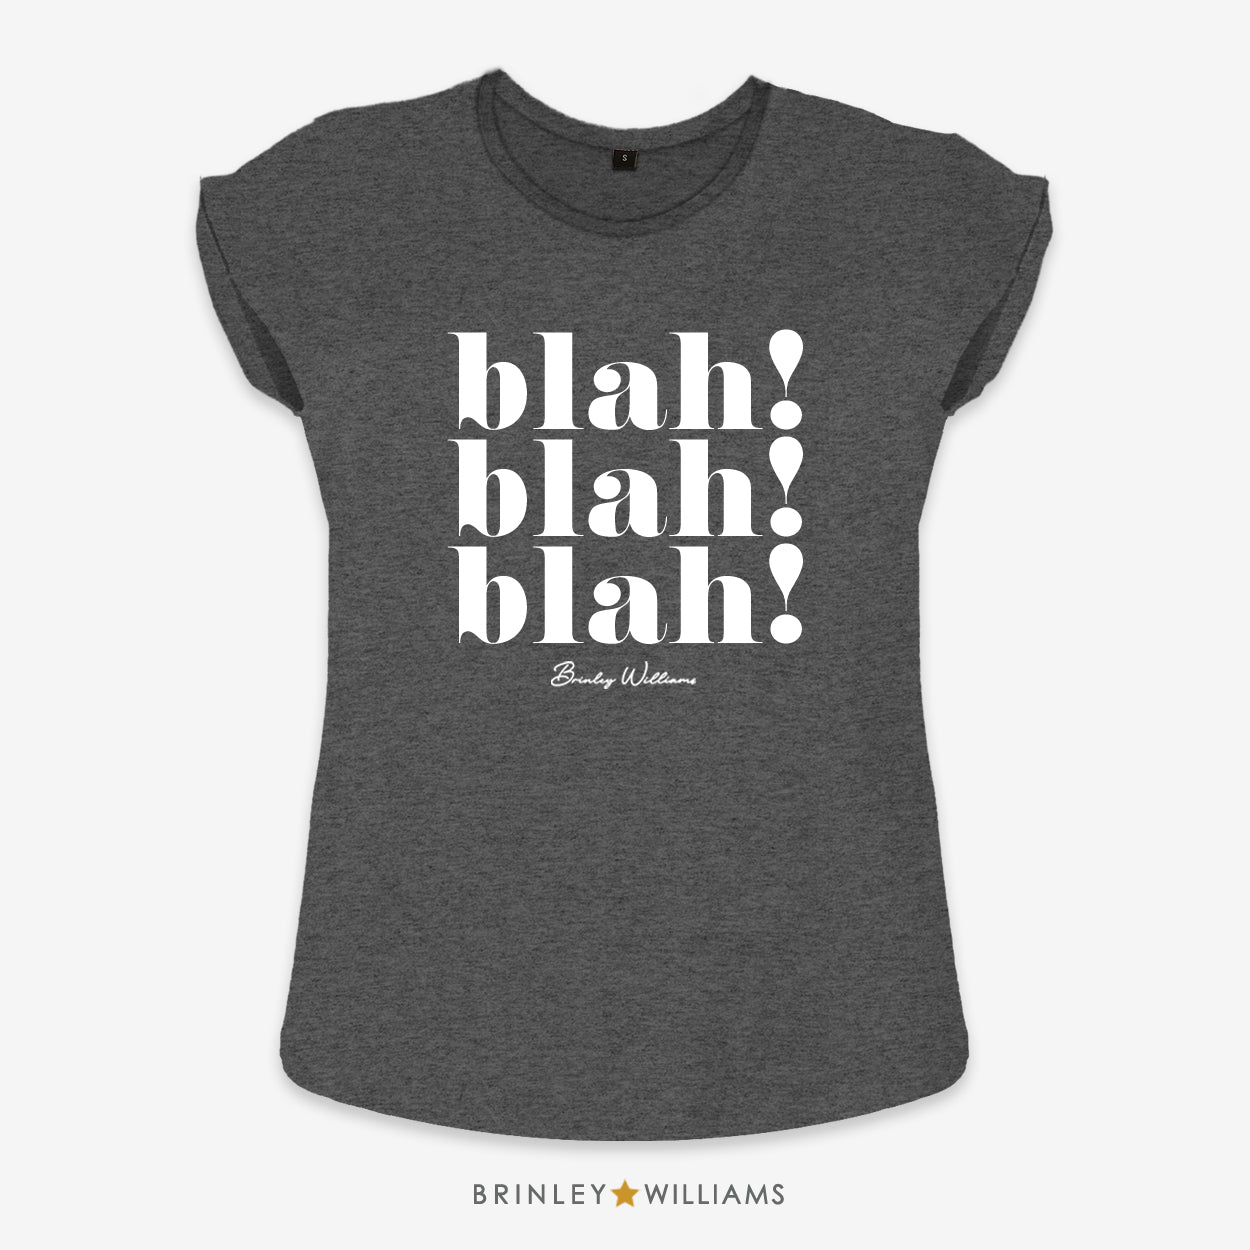 Blah blah blah Rolled Sleeve T-shirt - Charcoal